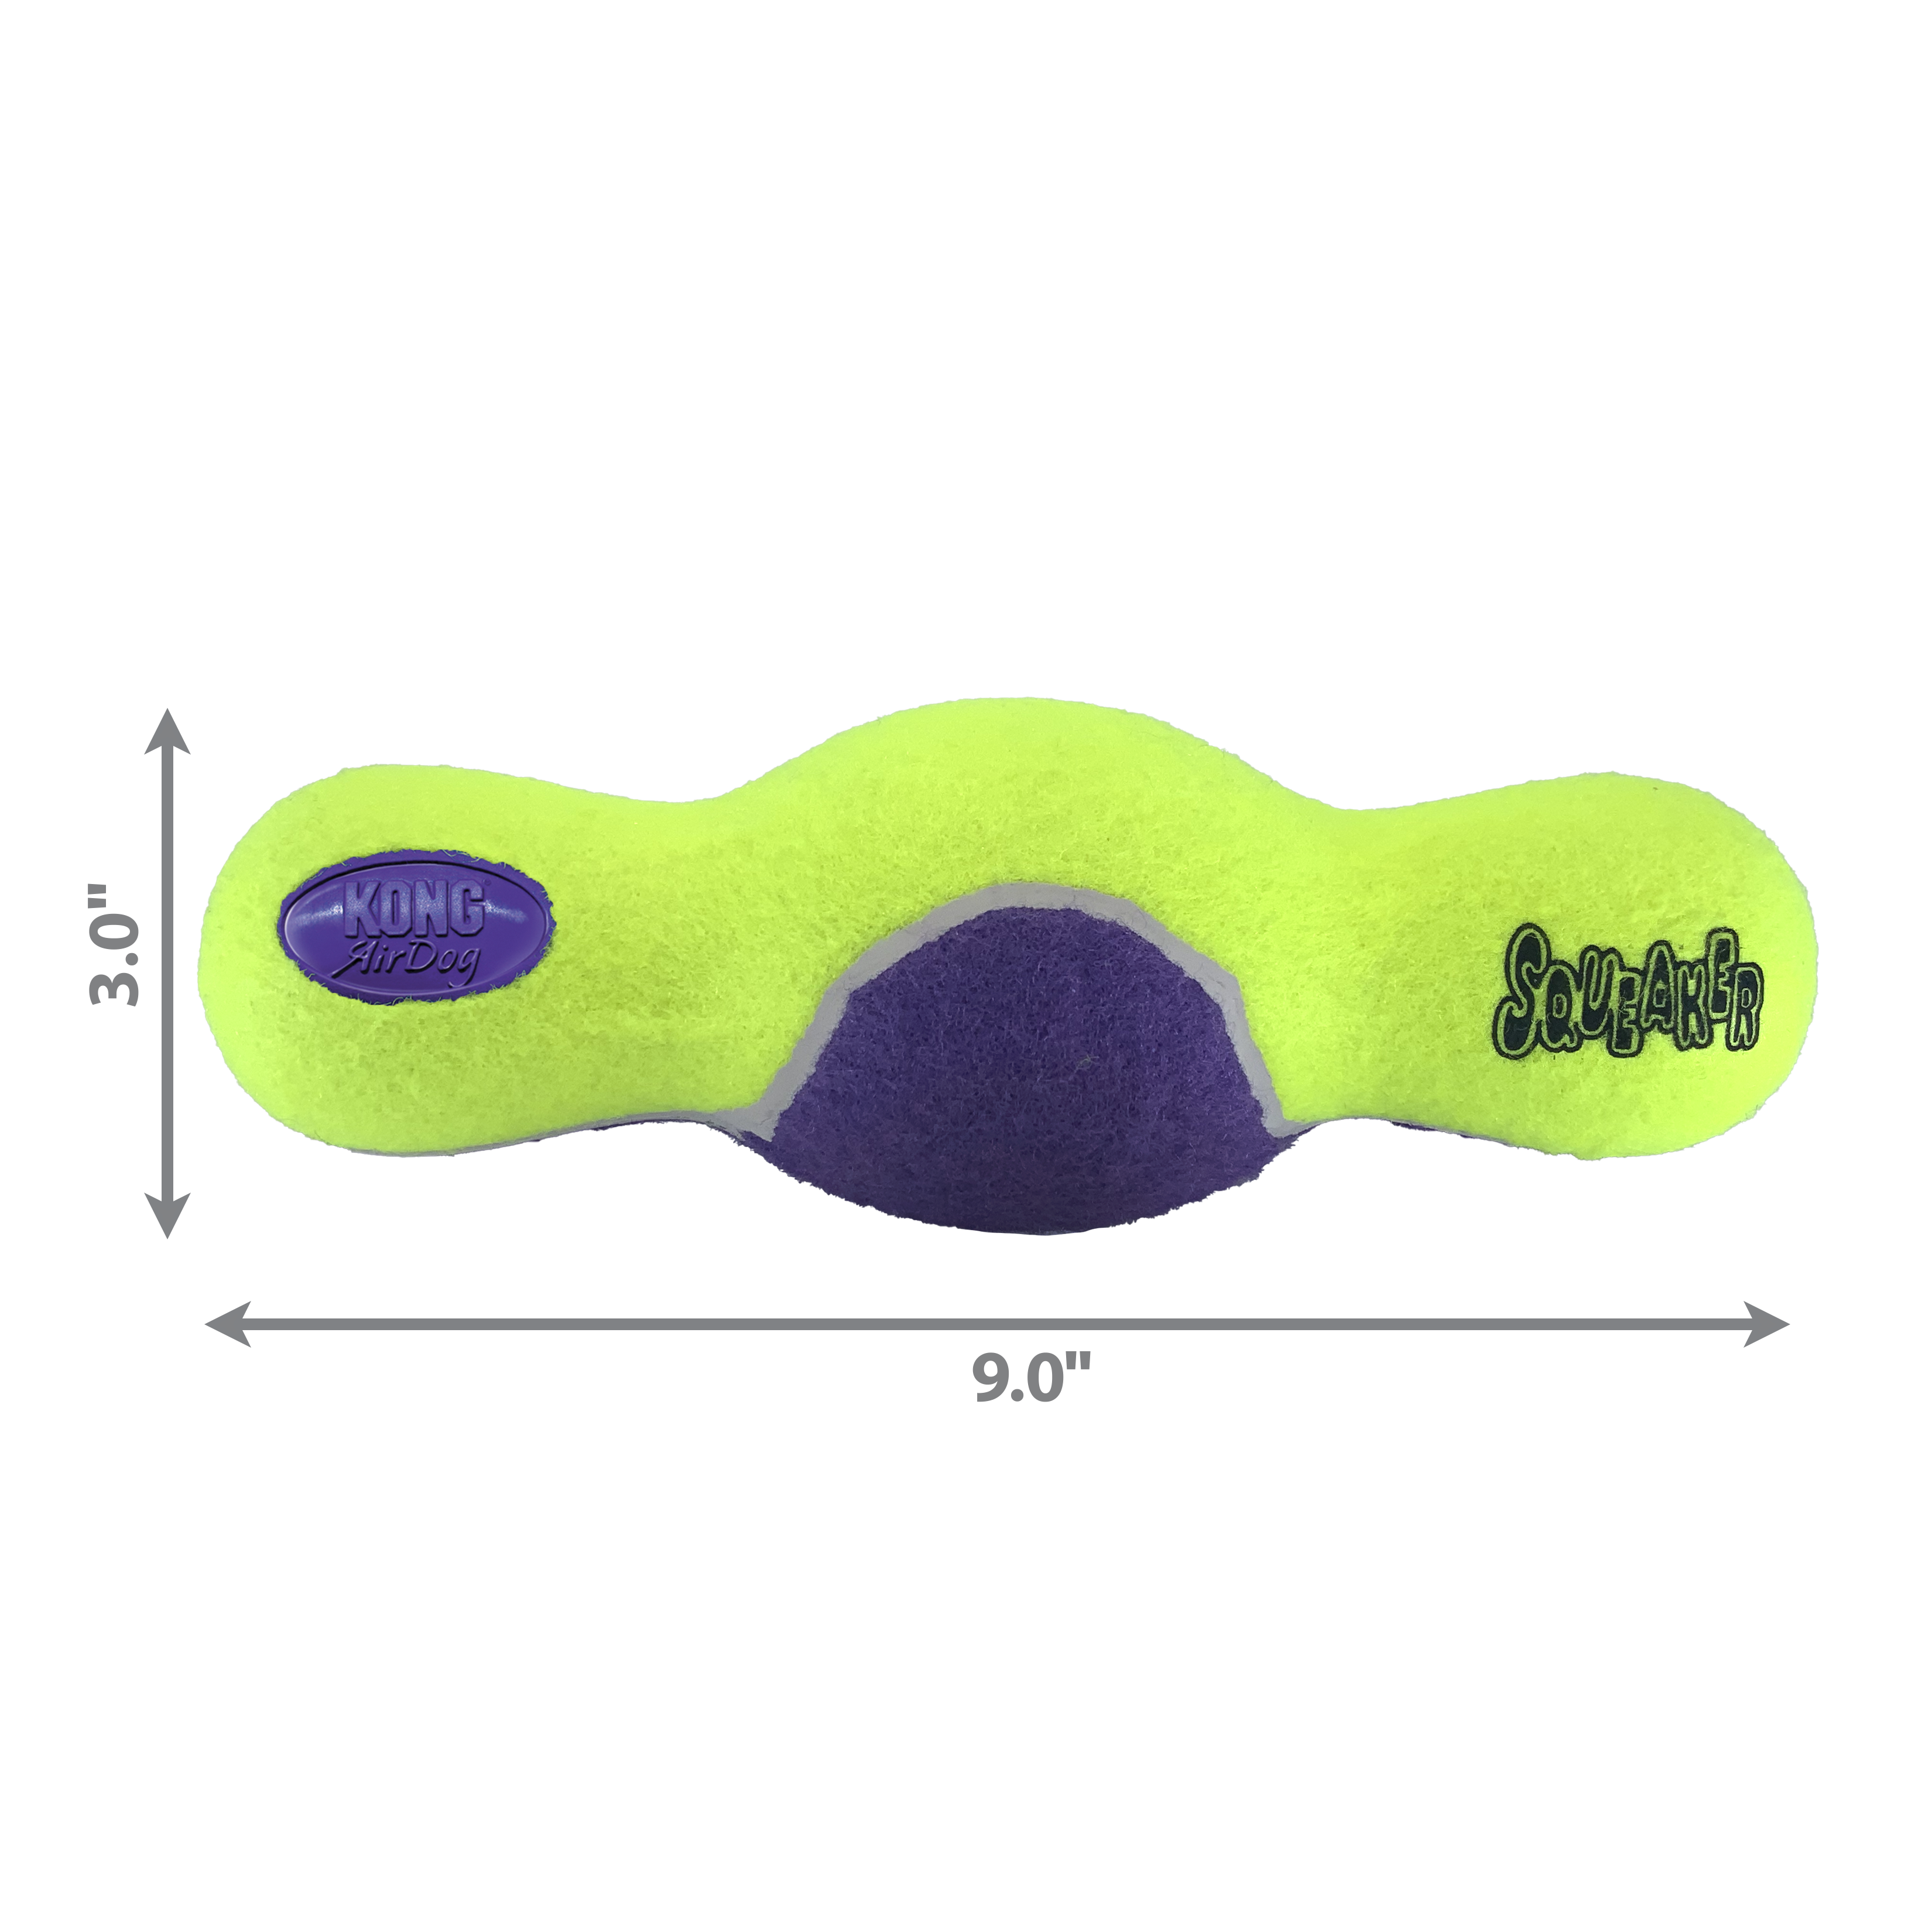 AirDog Squeaker Roller dimoffpack termékkép